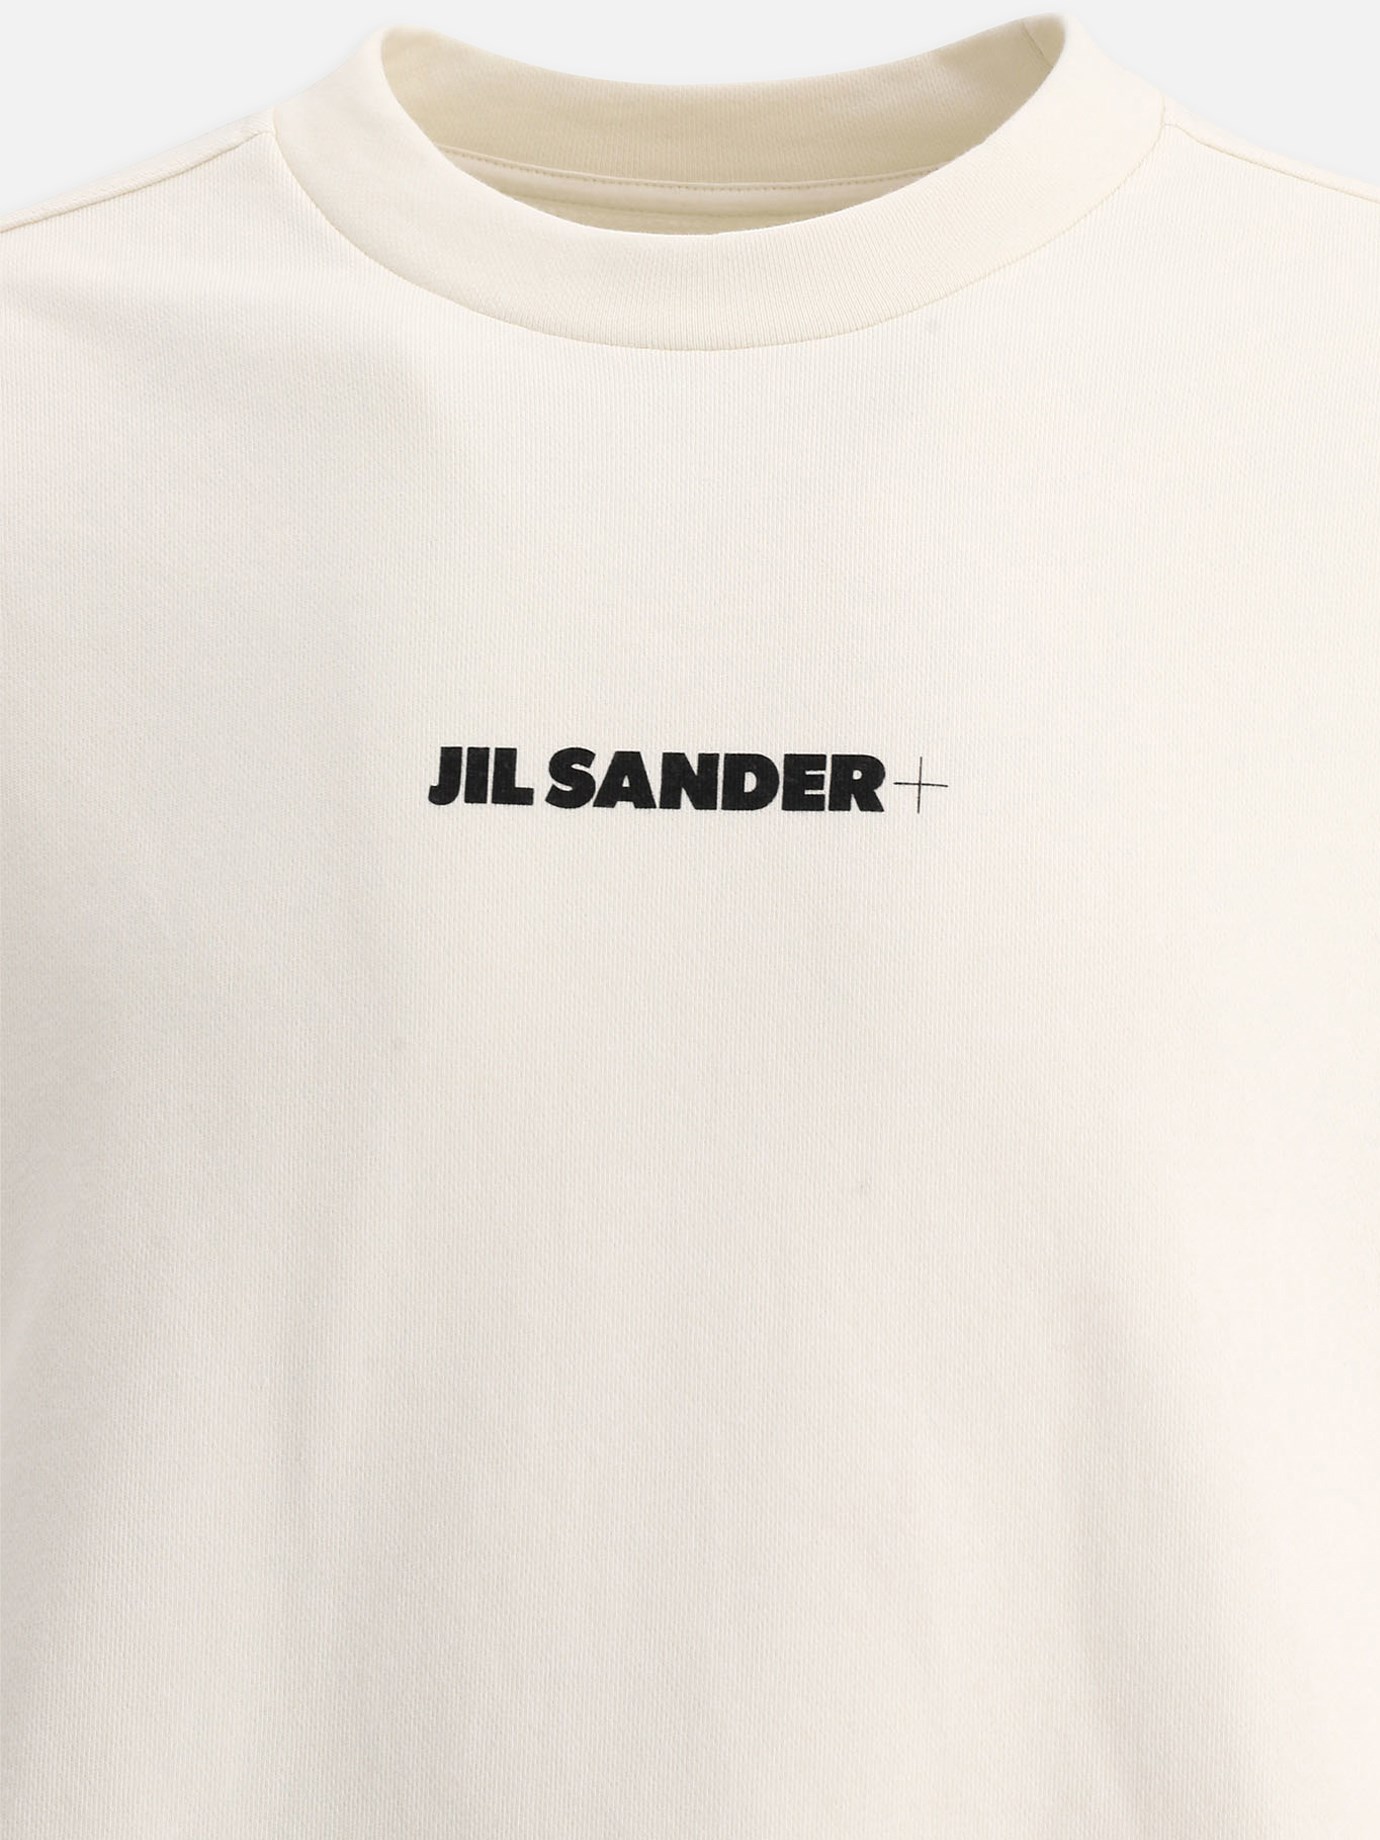  Jil Sander+  sweatshirt by Jil Sander